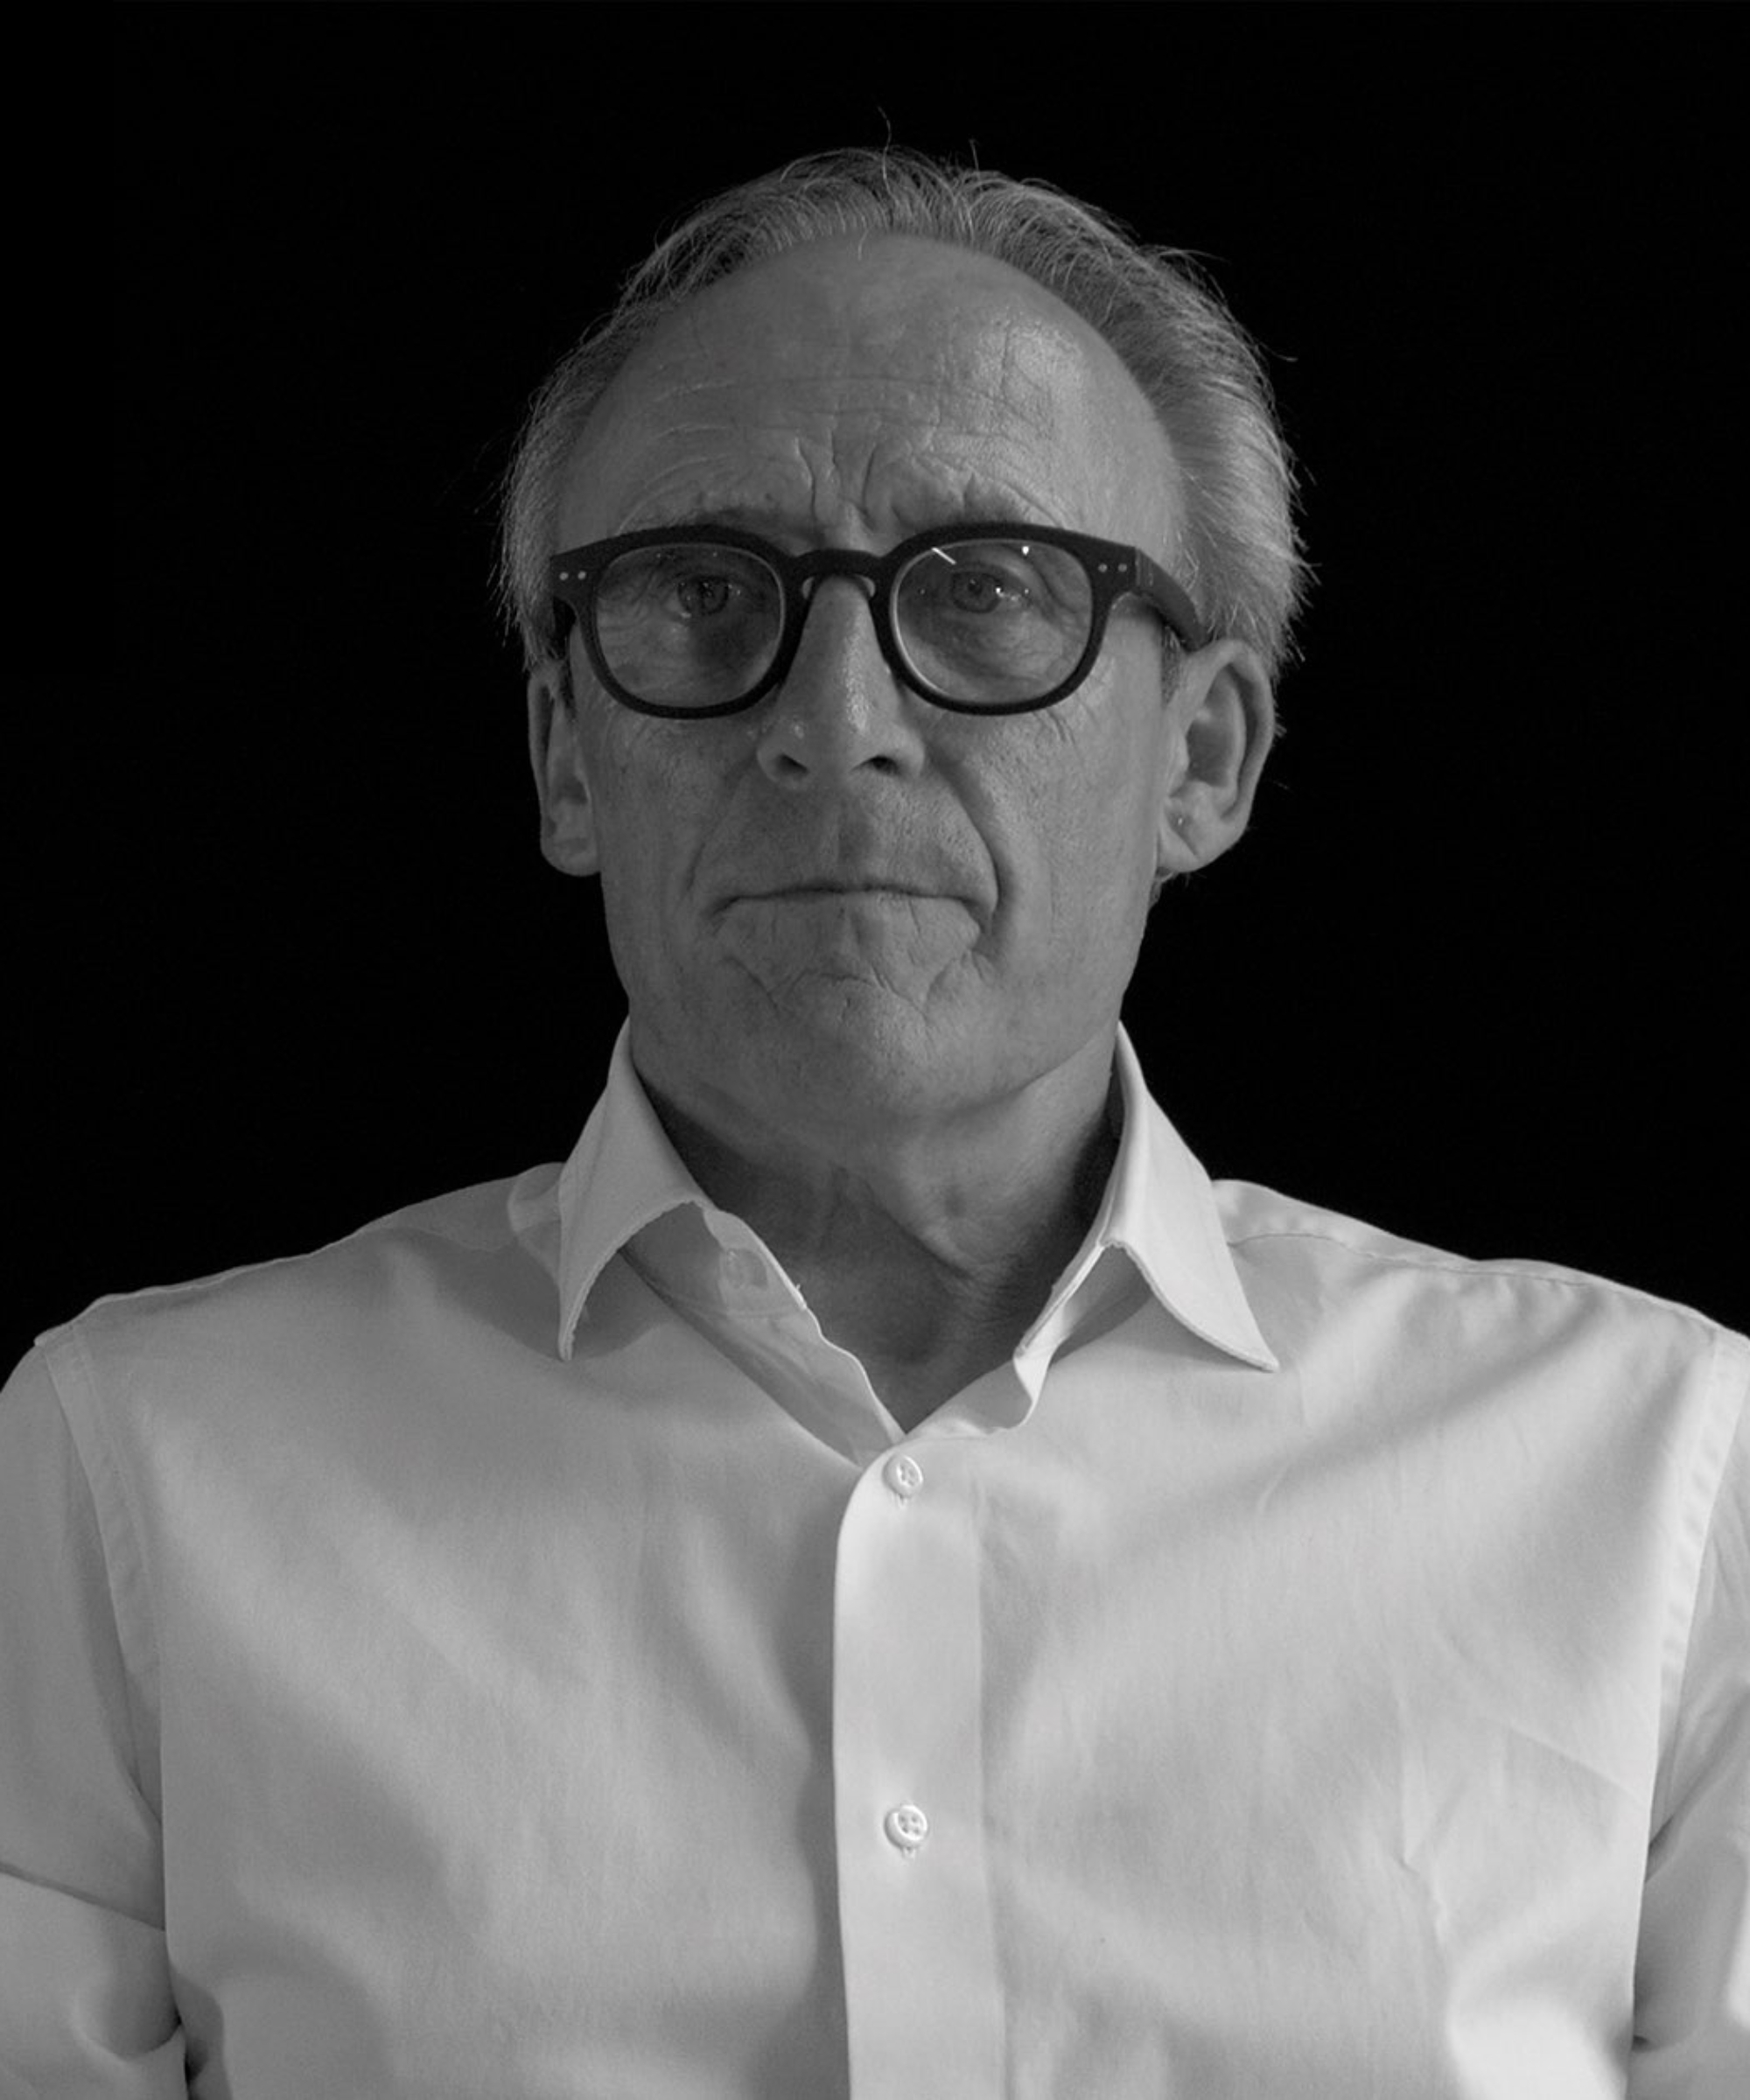 black and white headshot of man wearing white shirt and glasses